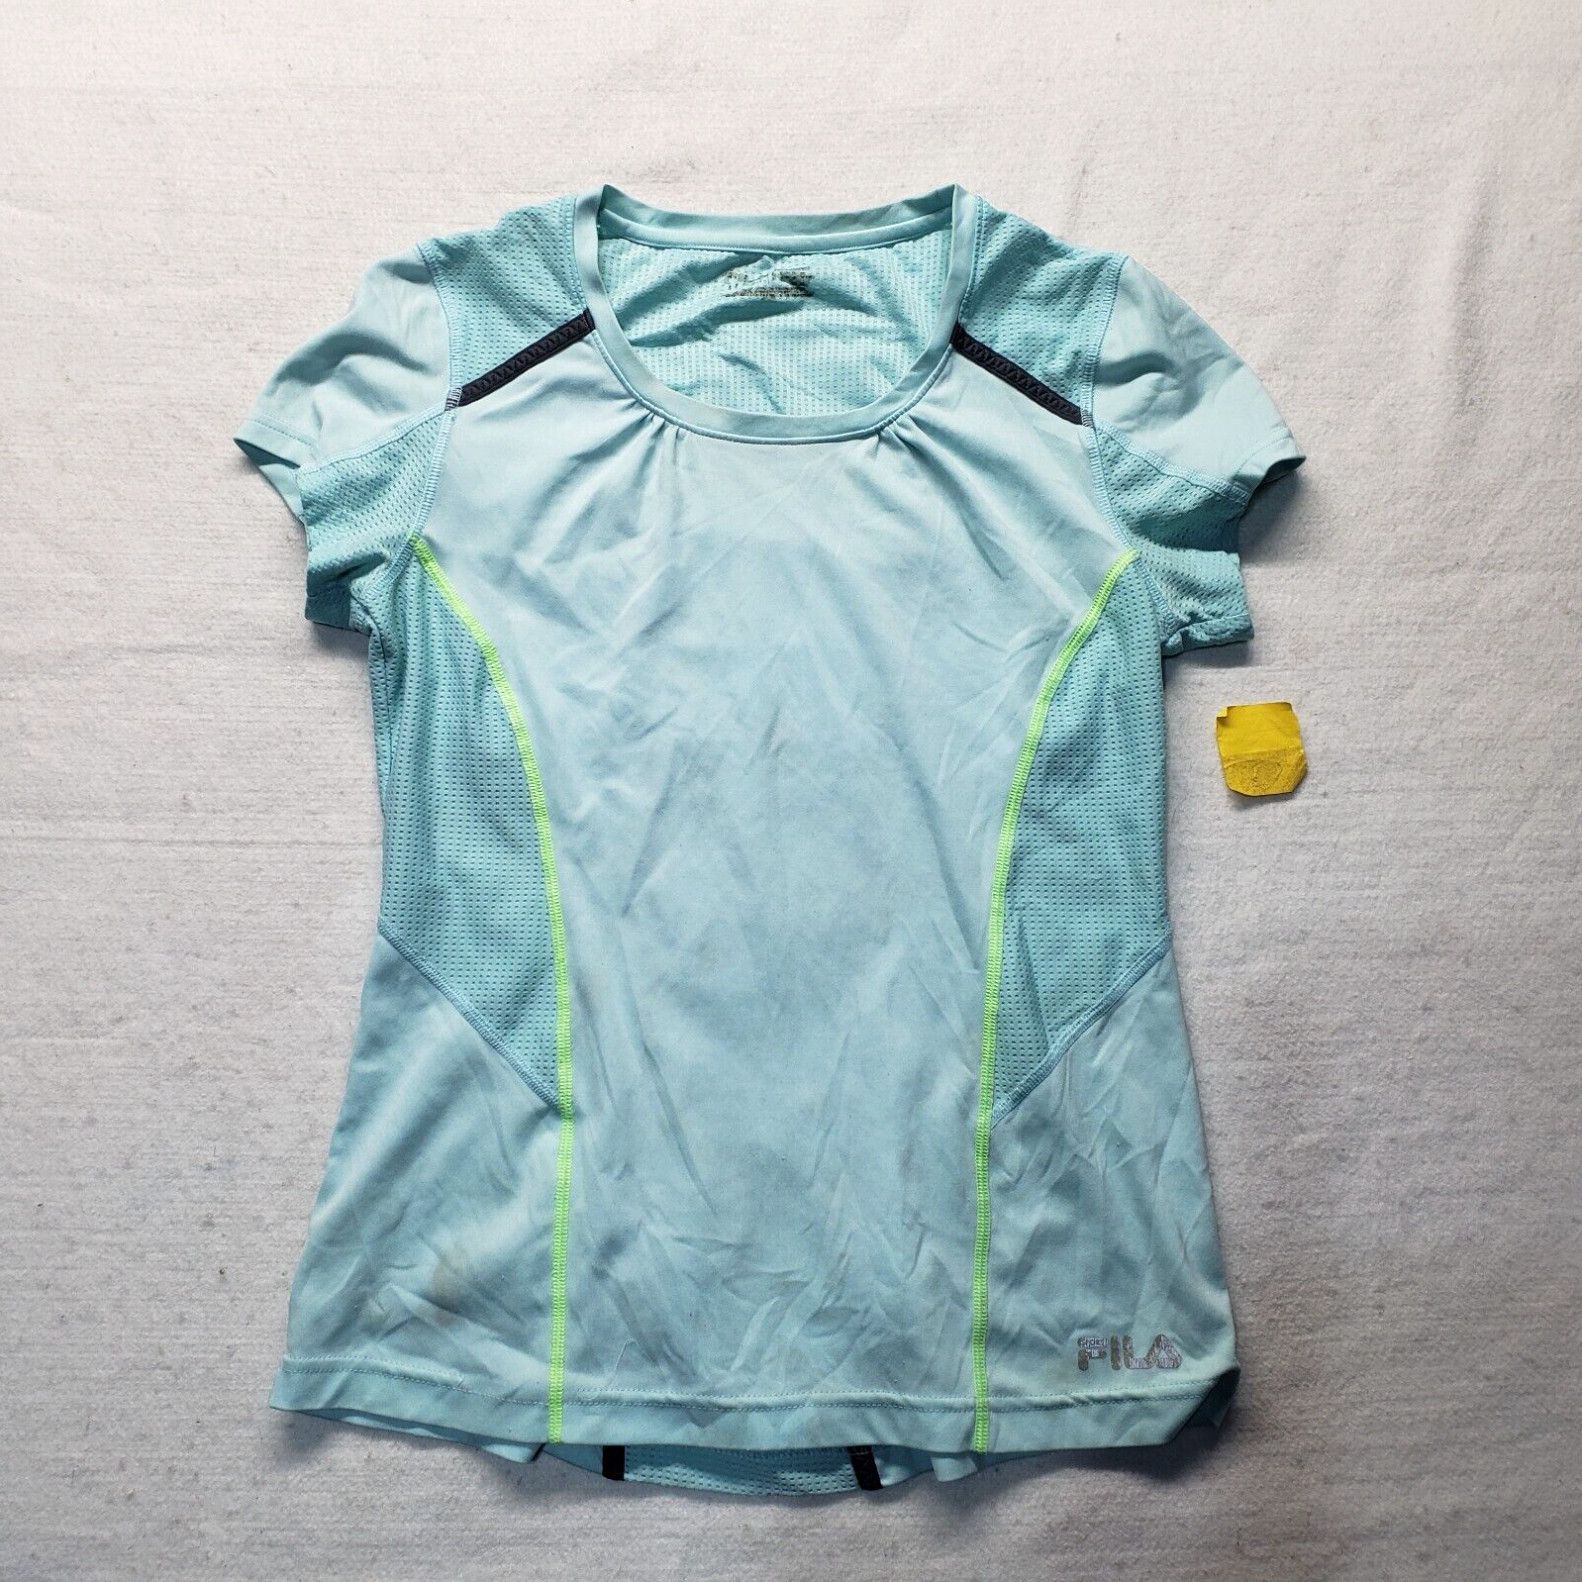 Fila Fila T Shirt Light Blue Sport Short Sleeve Athletic Polyester Workout  Women's S